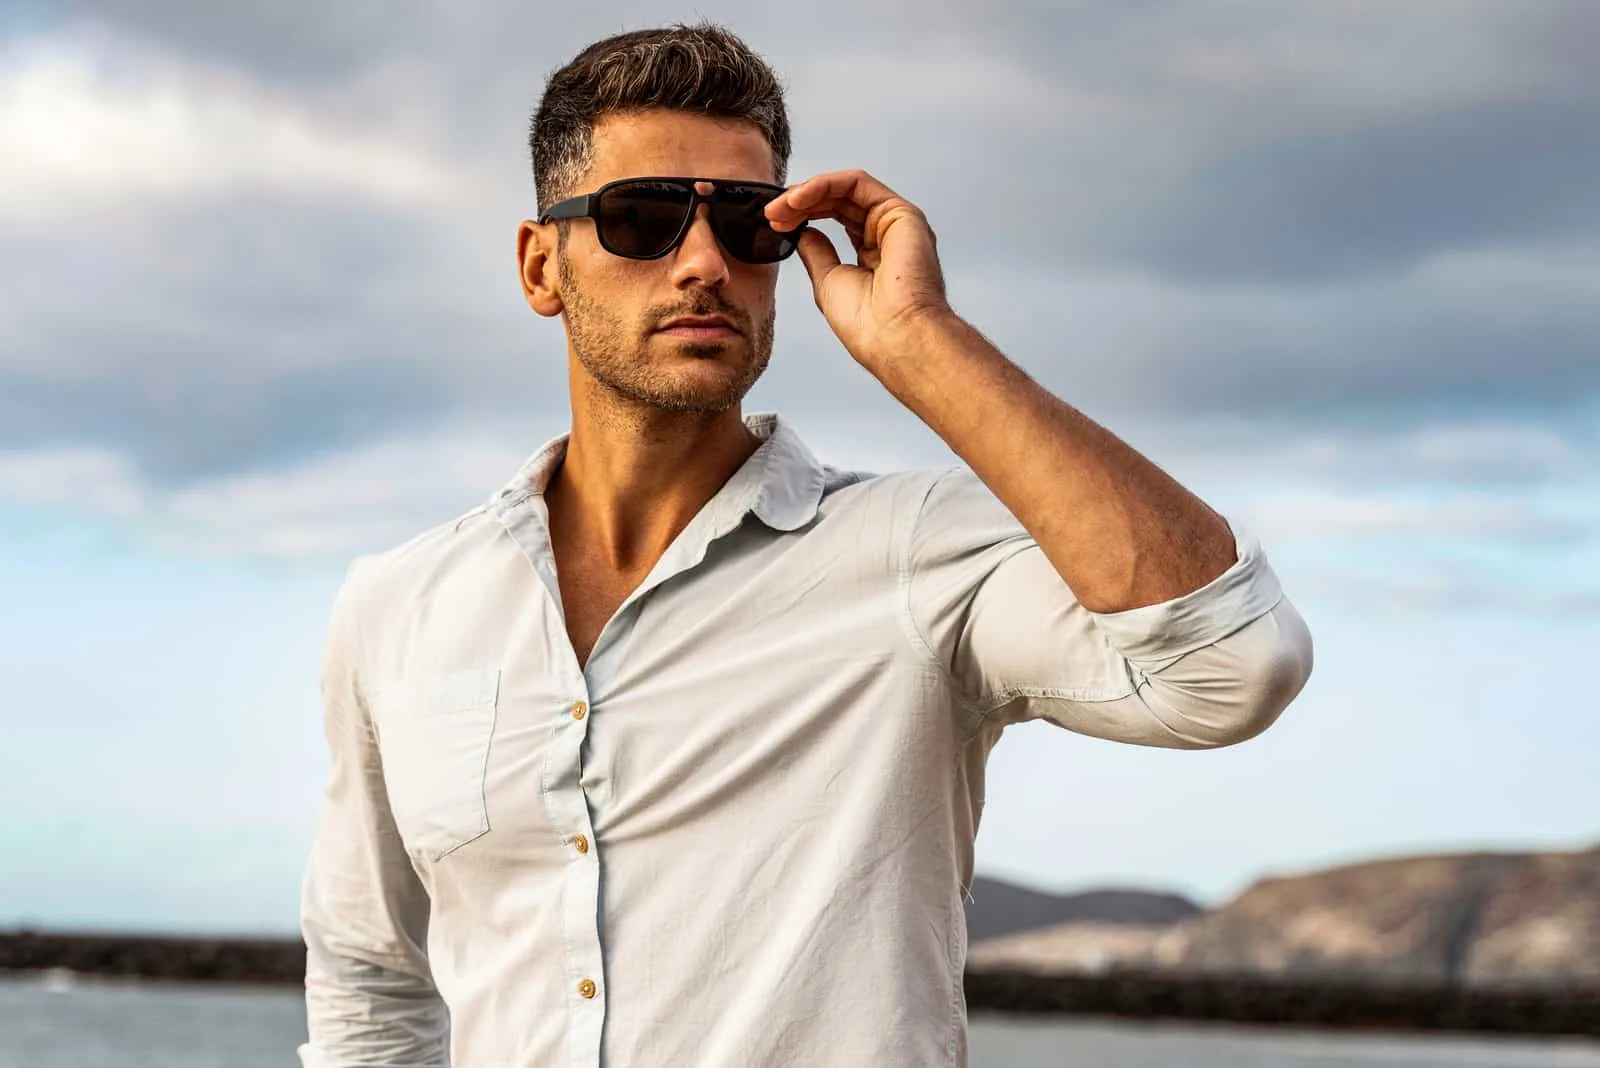 Gorgeous stylish man wearing fashionable shirt and sunglasses